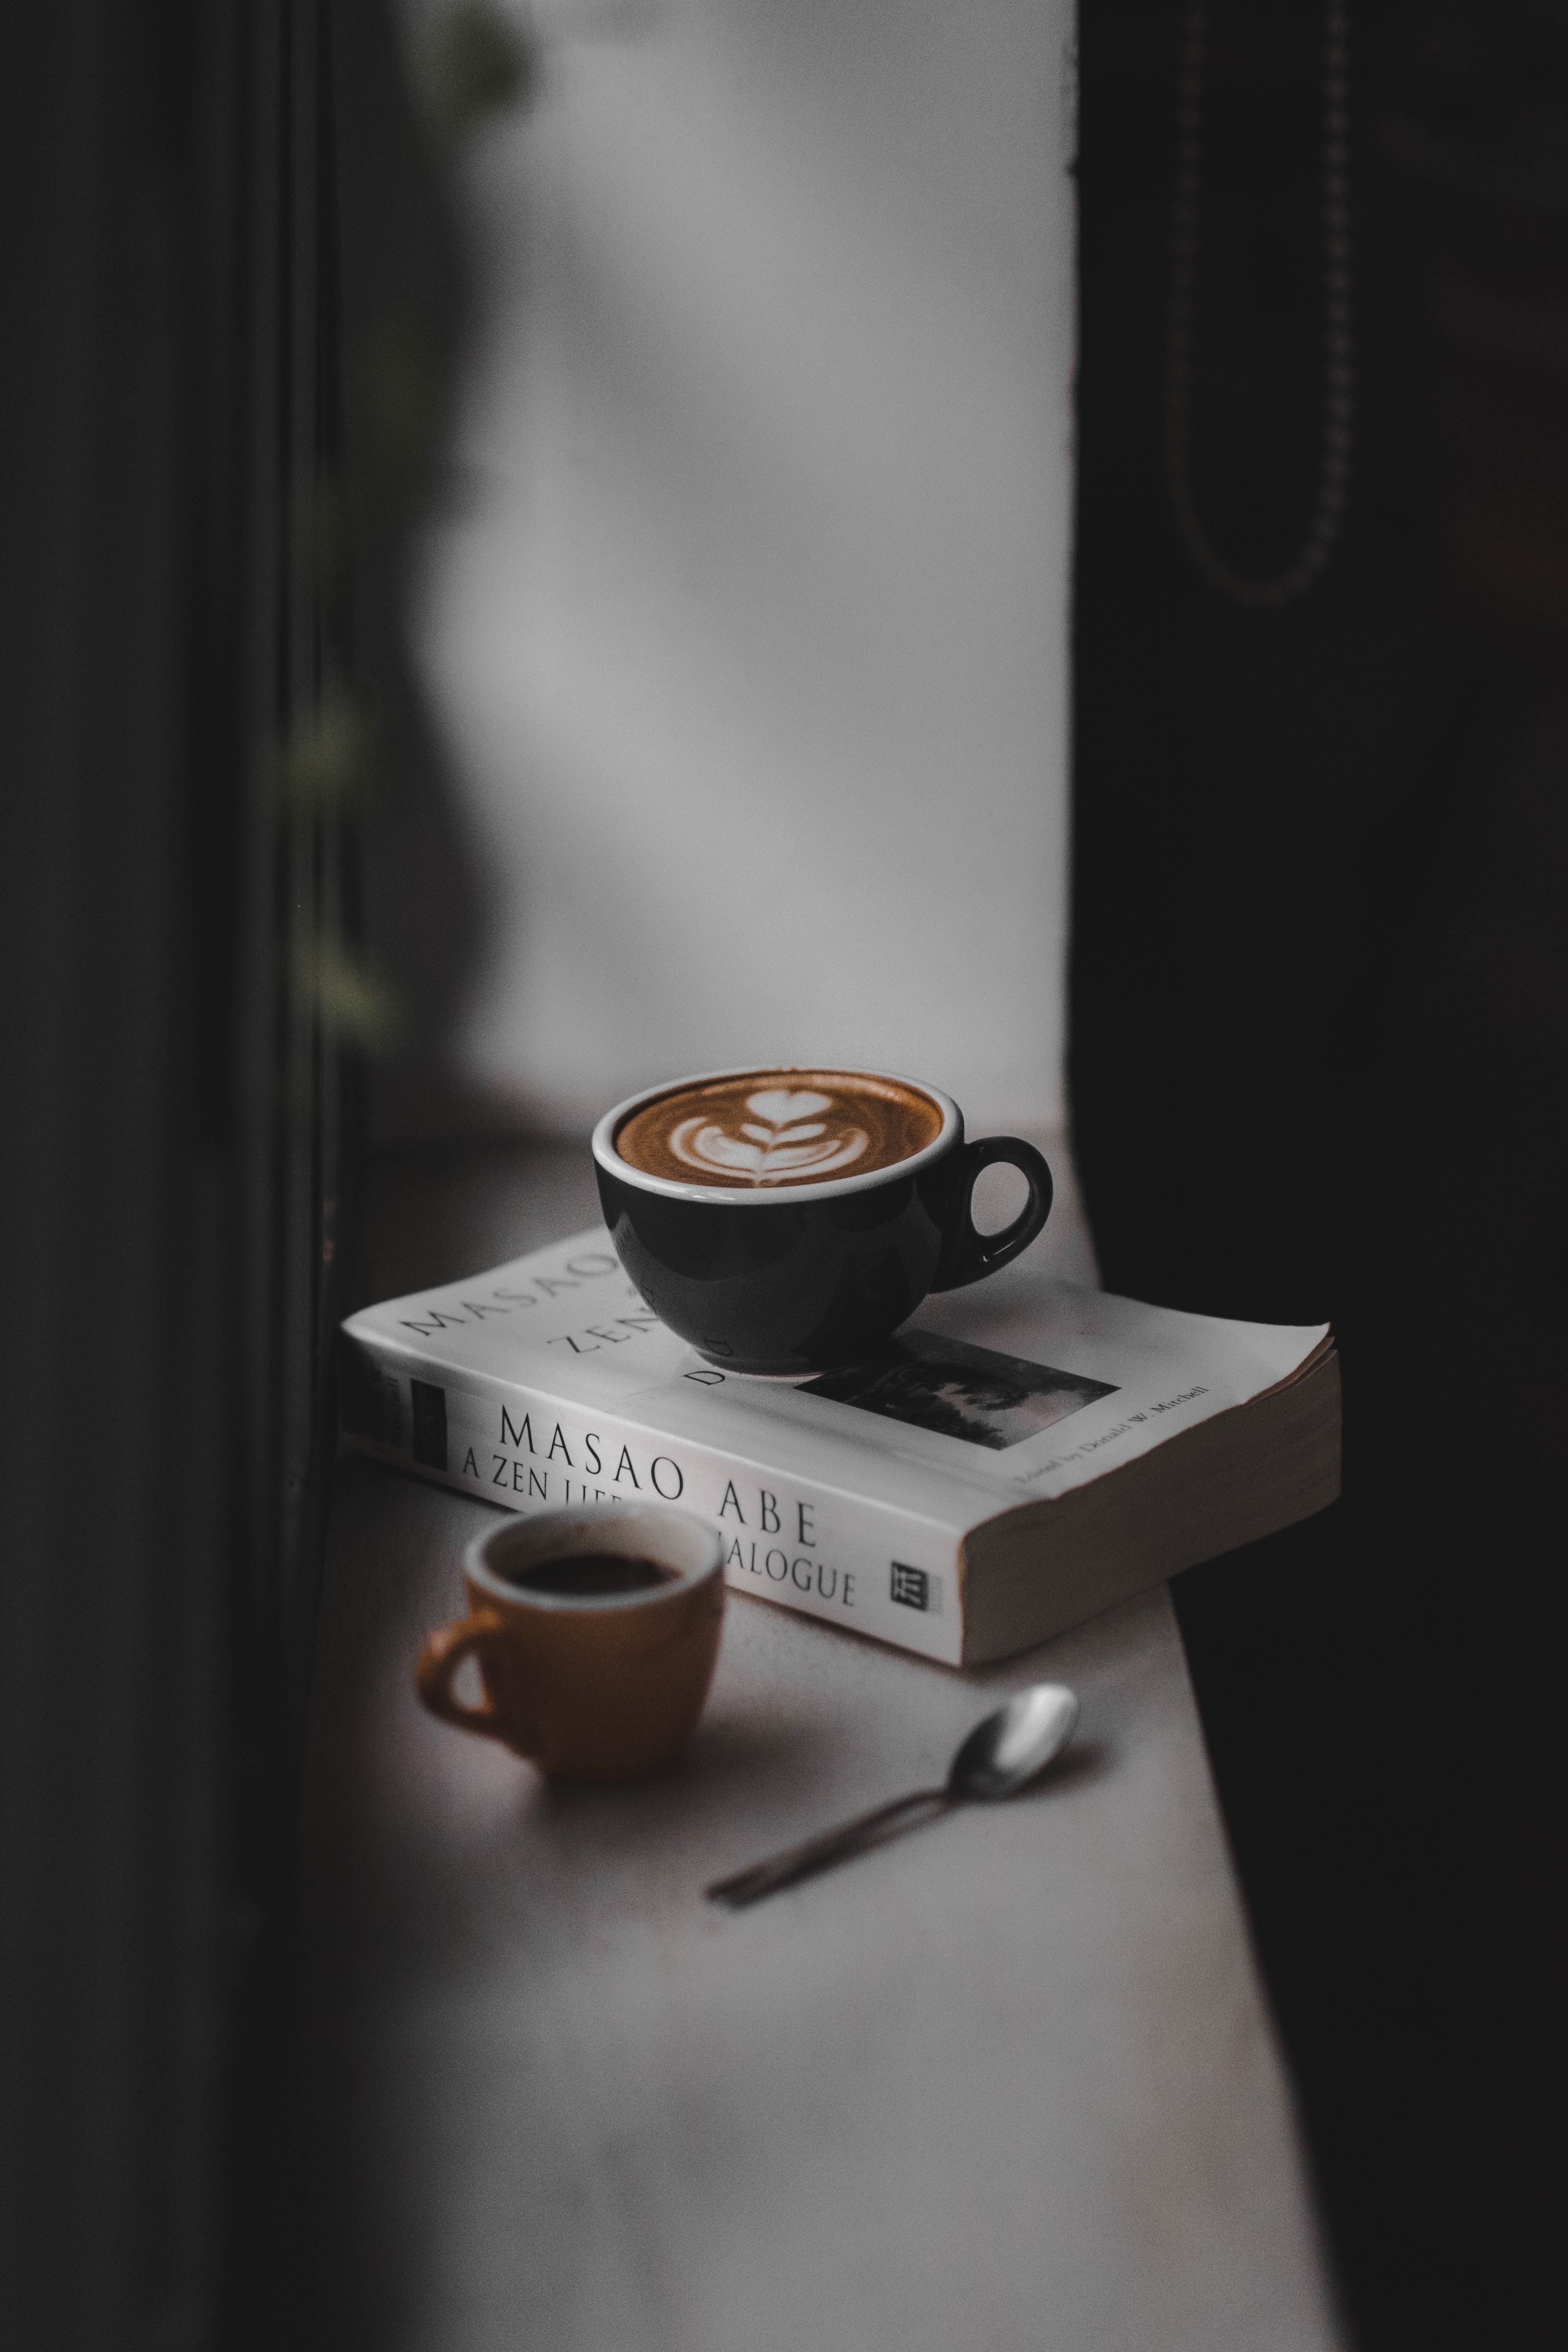 coffee, reading, coziness, book, comfort, window sill, windowsill, food